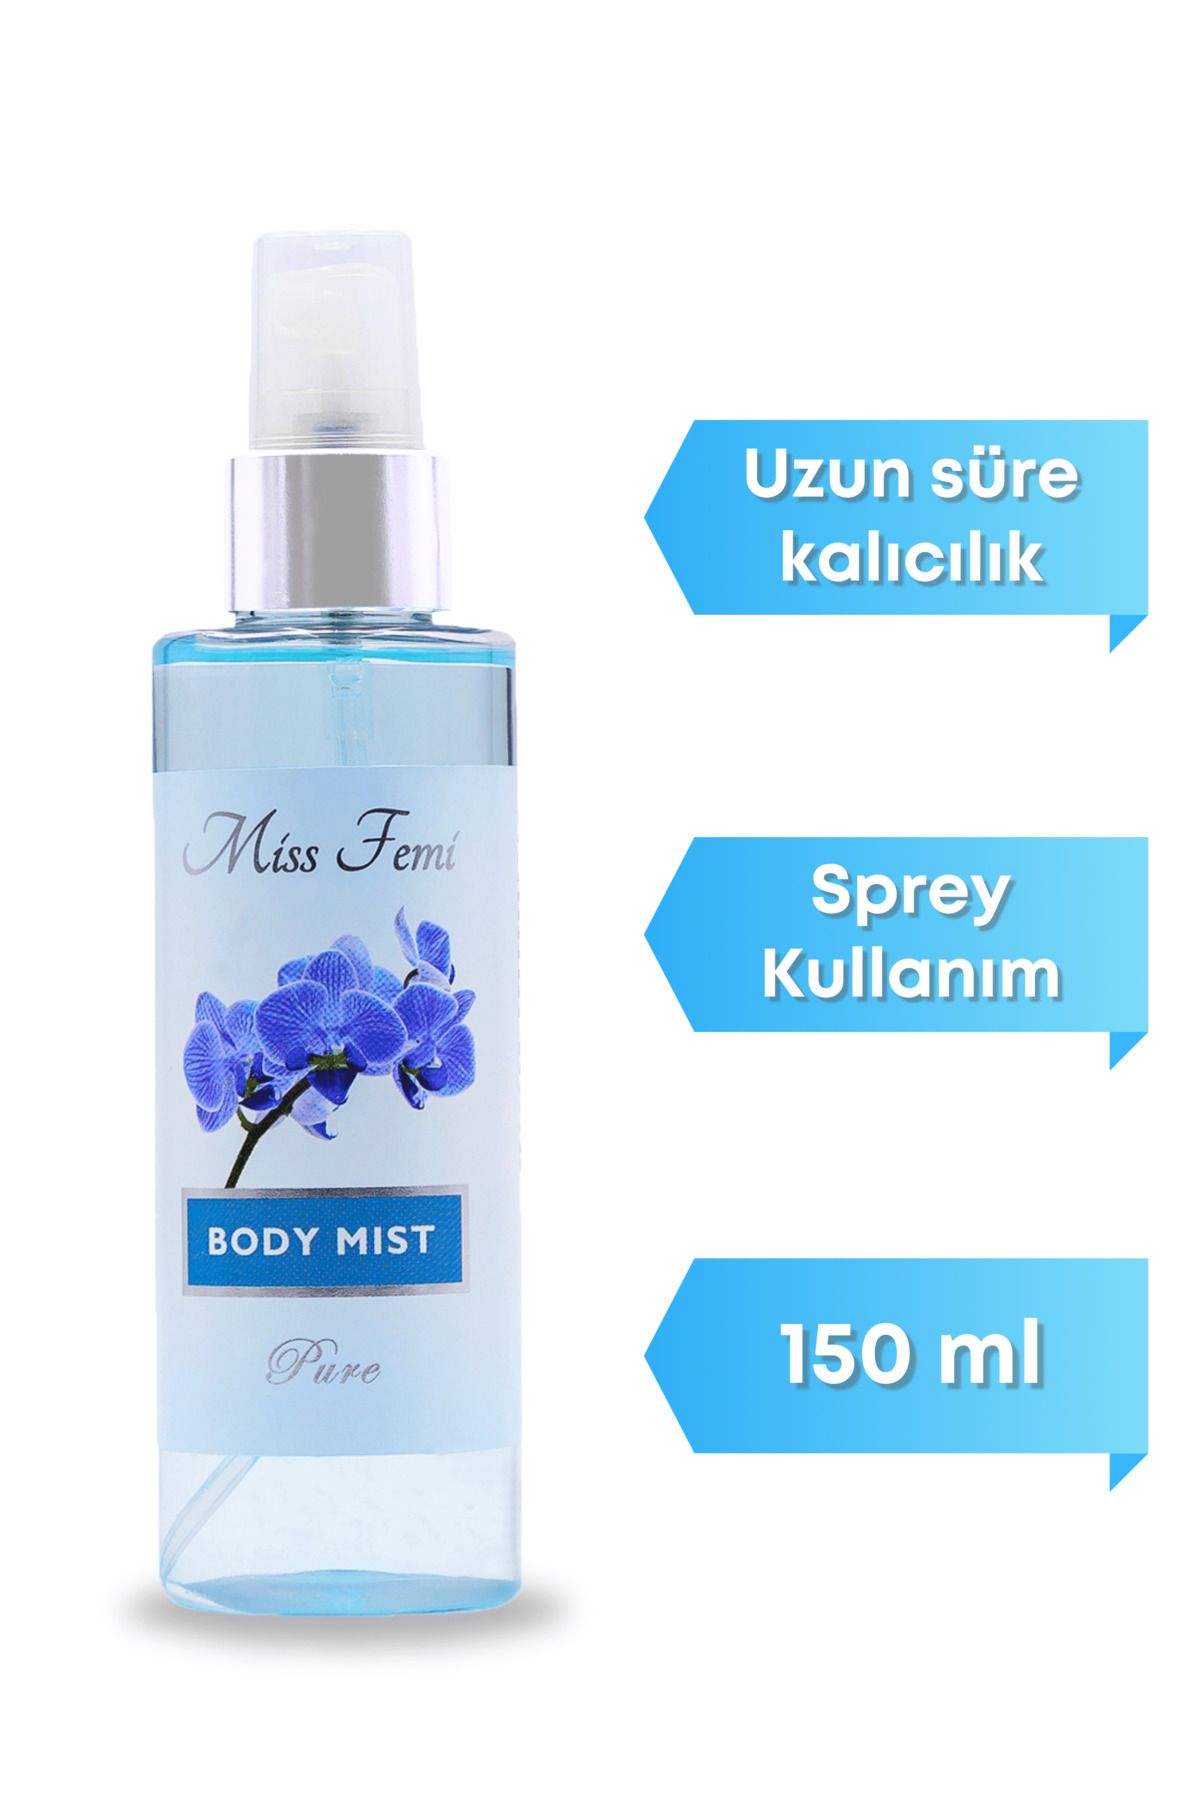 Misedor Missfemi Pure Body Mist 130 ml